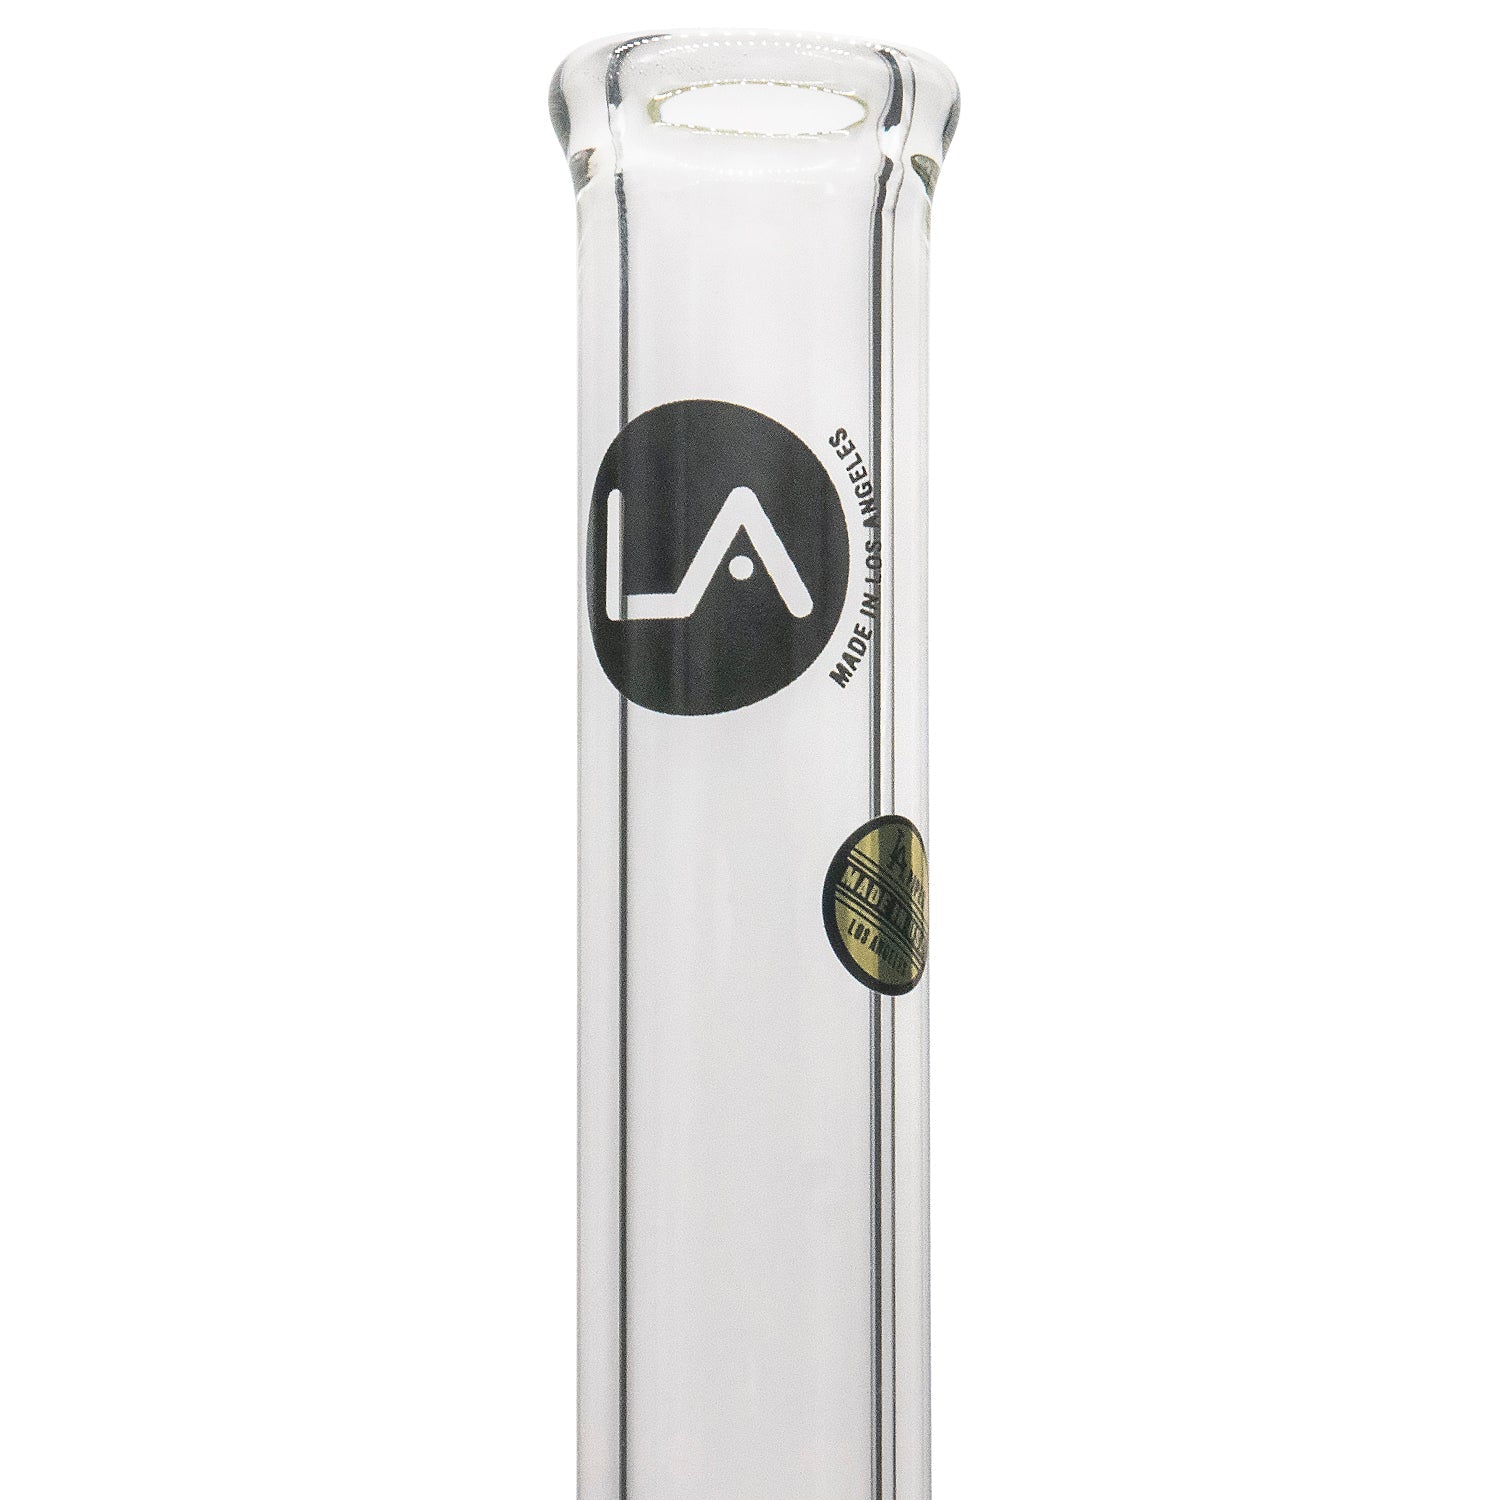 LA Pipes 14” Slim Laboratory Beaker Bong by LA Pipes | Mission Dispensary